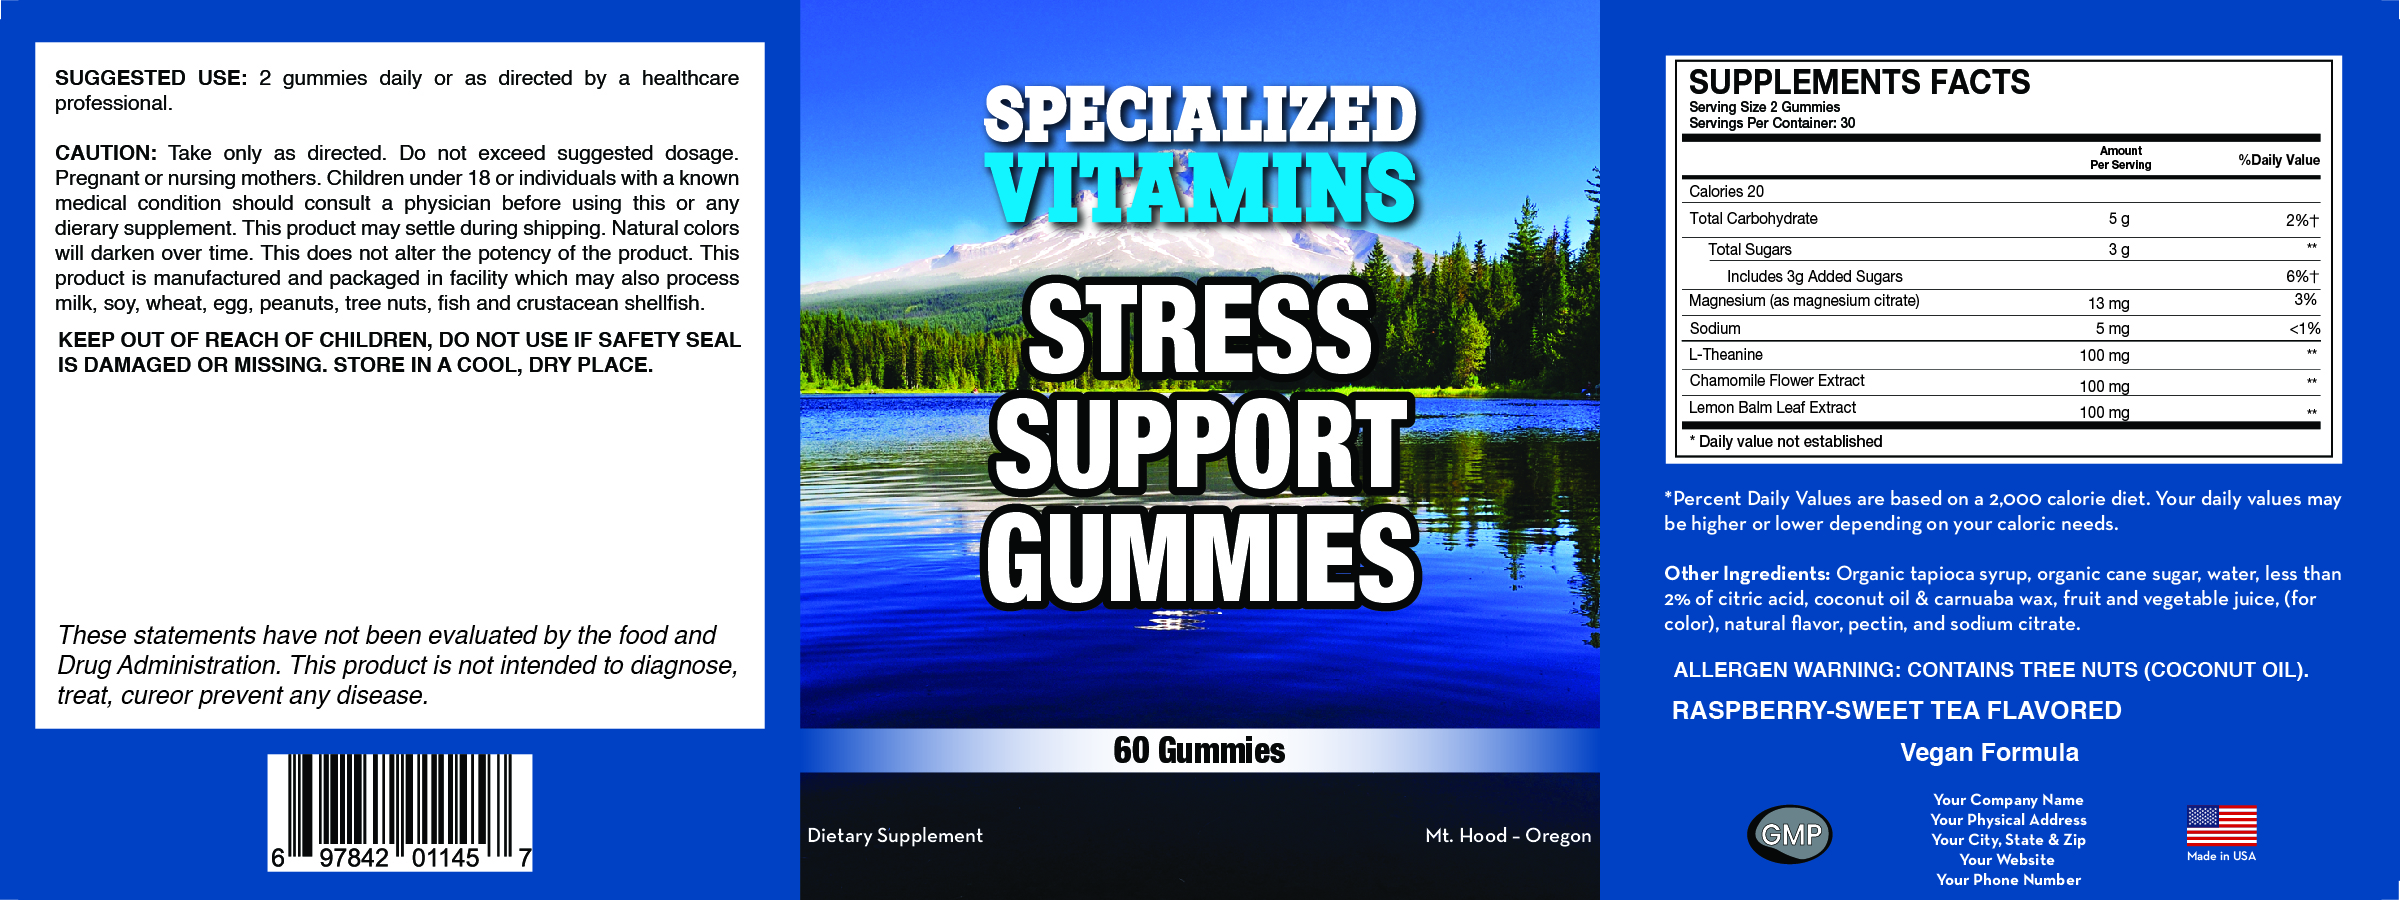 Stress Support Gummies - Vegetarian - 60 Gummies